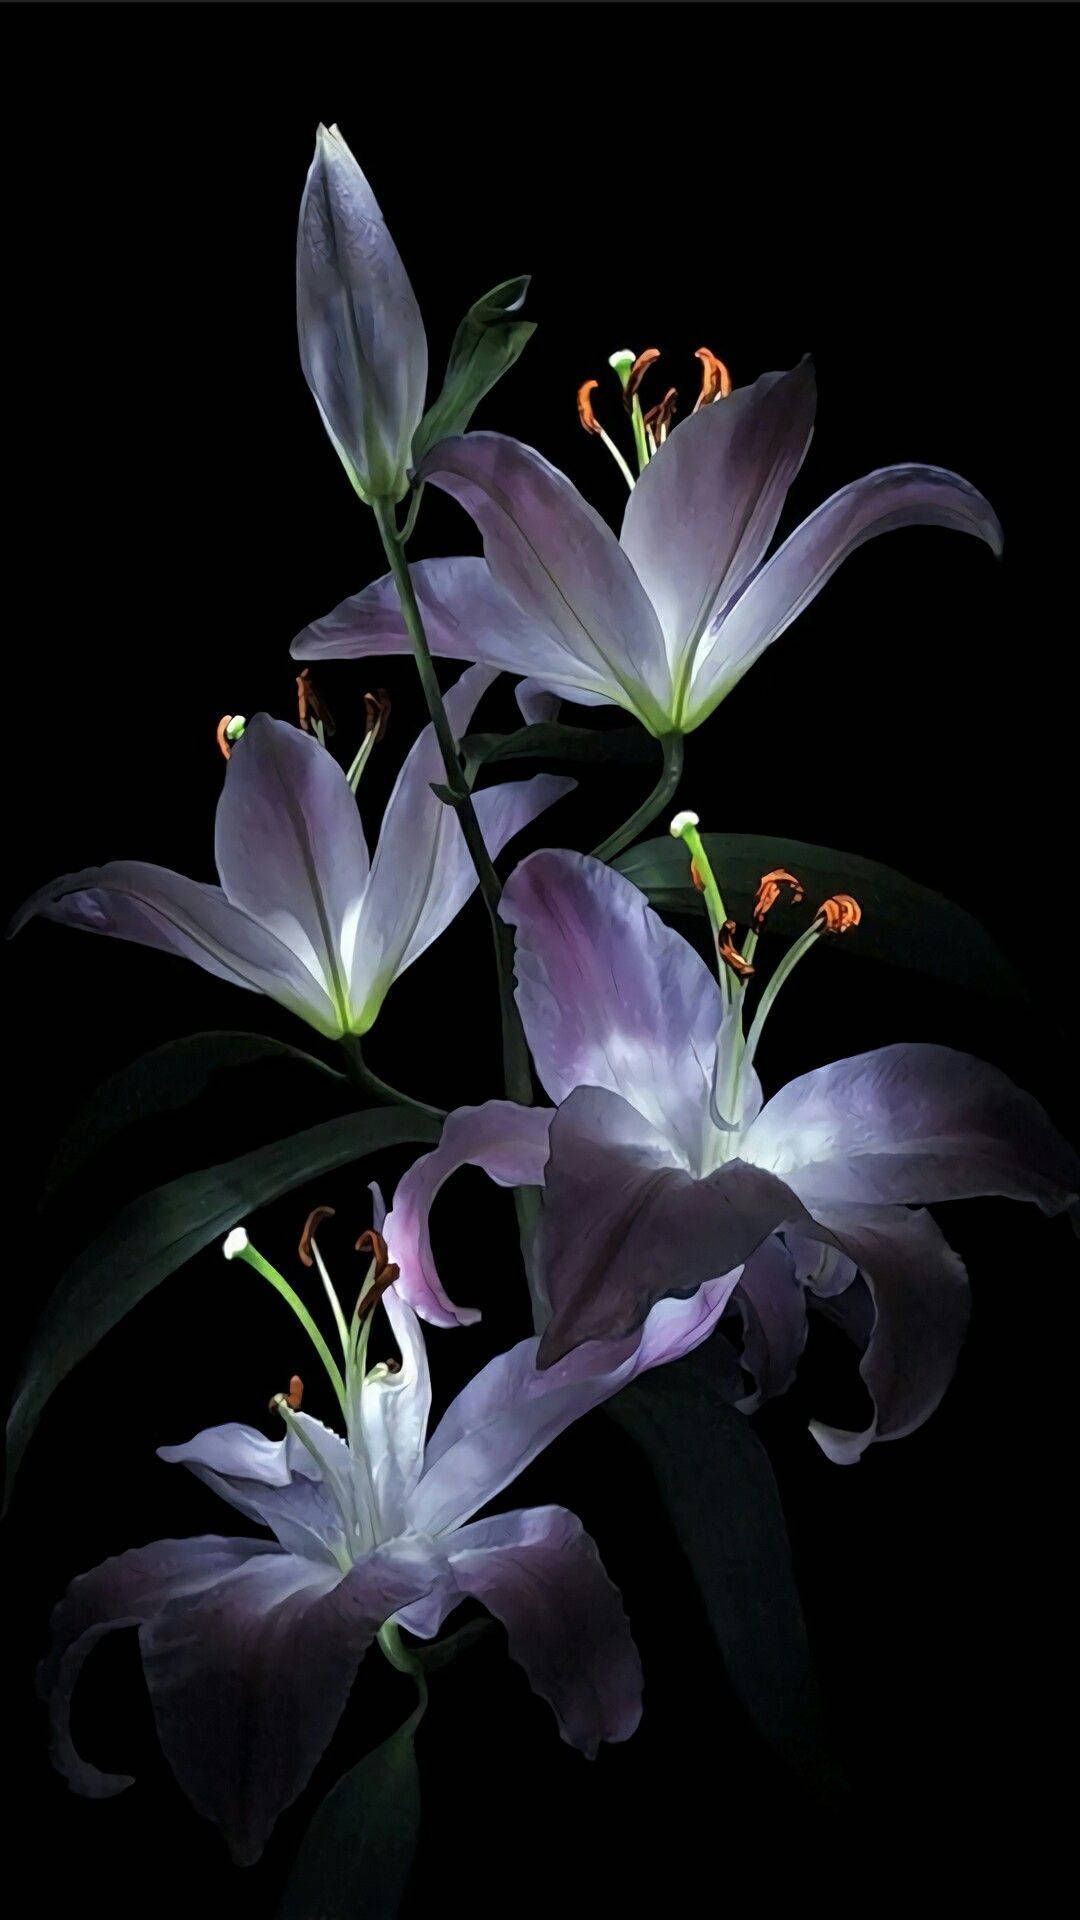 Gleaming White Lily In Dark